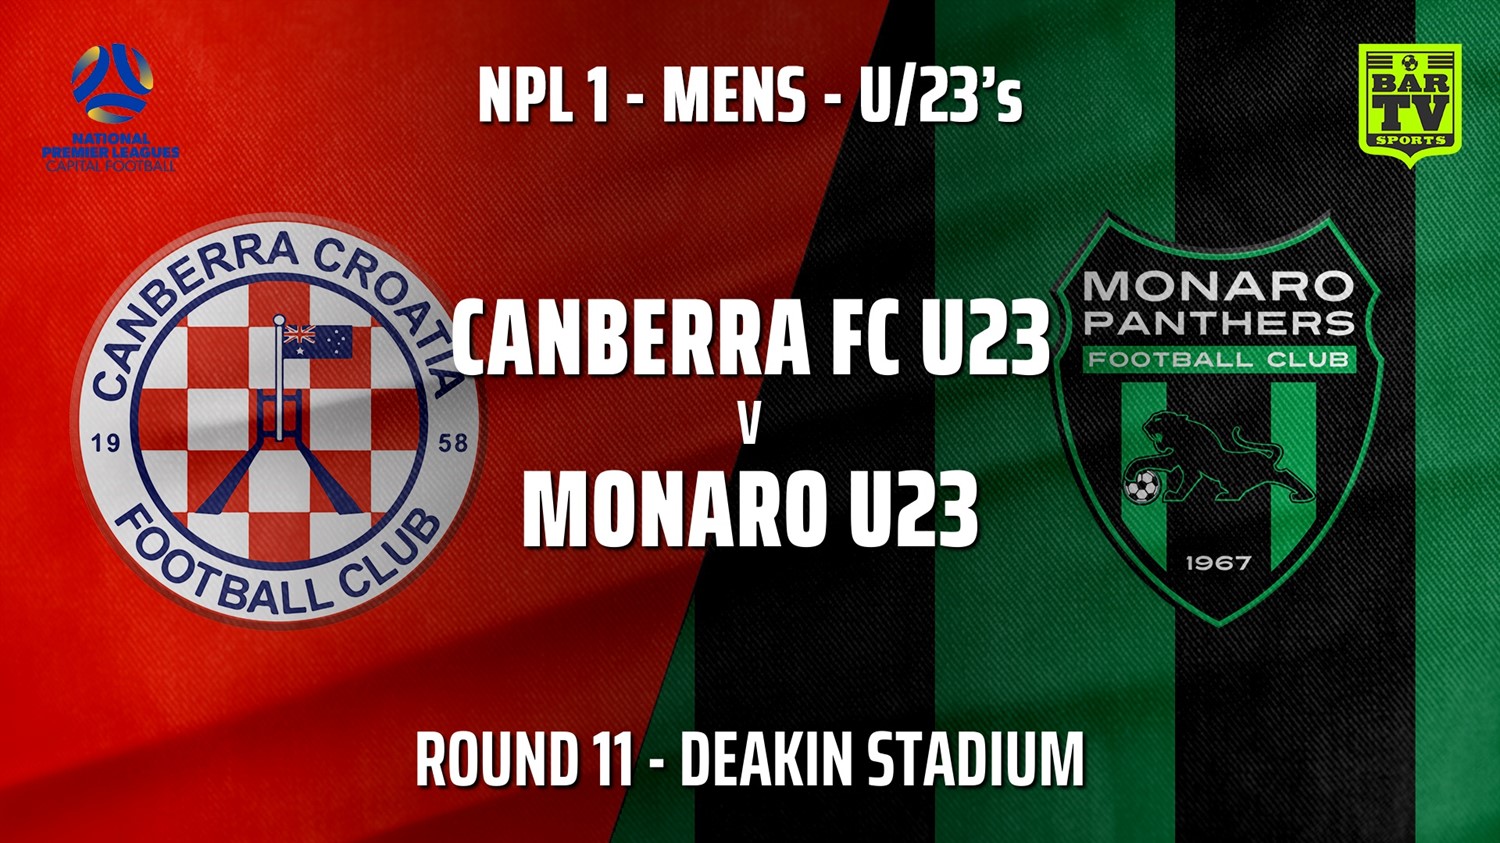 210627-Capital NPL U23 Round 11 - Canberra FC U23 v Monaro Panthers U23 Minigame Slate Image